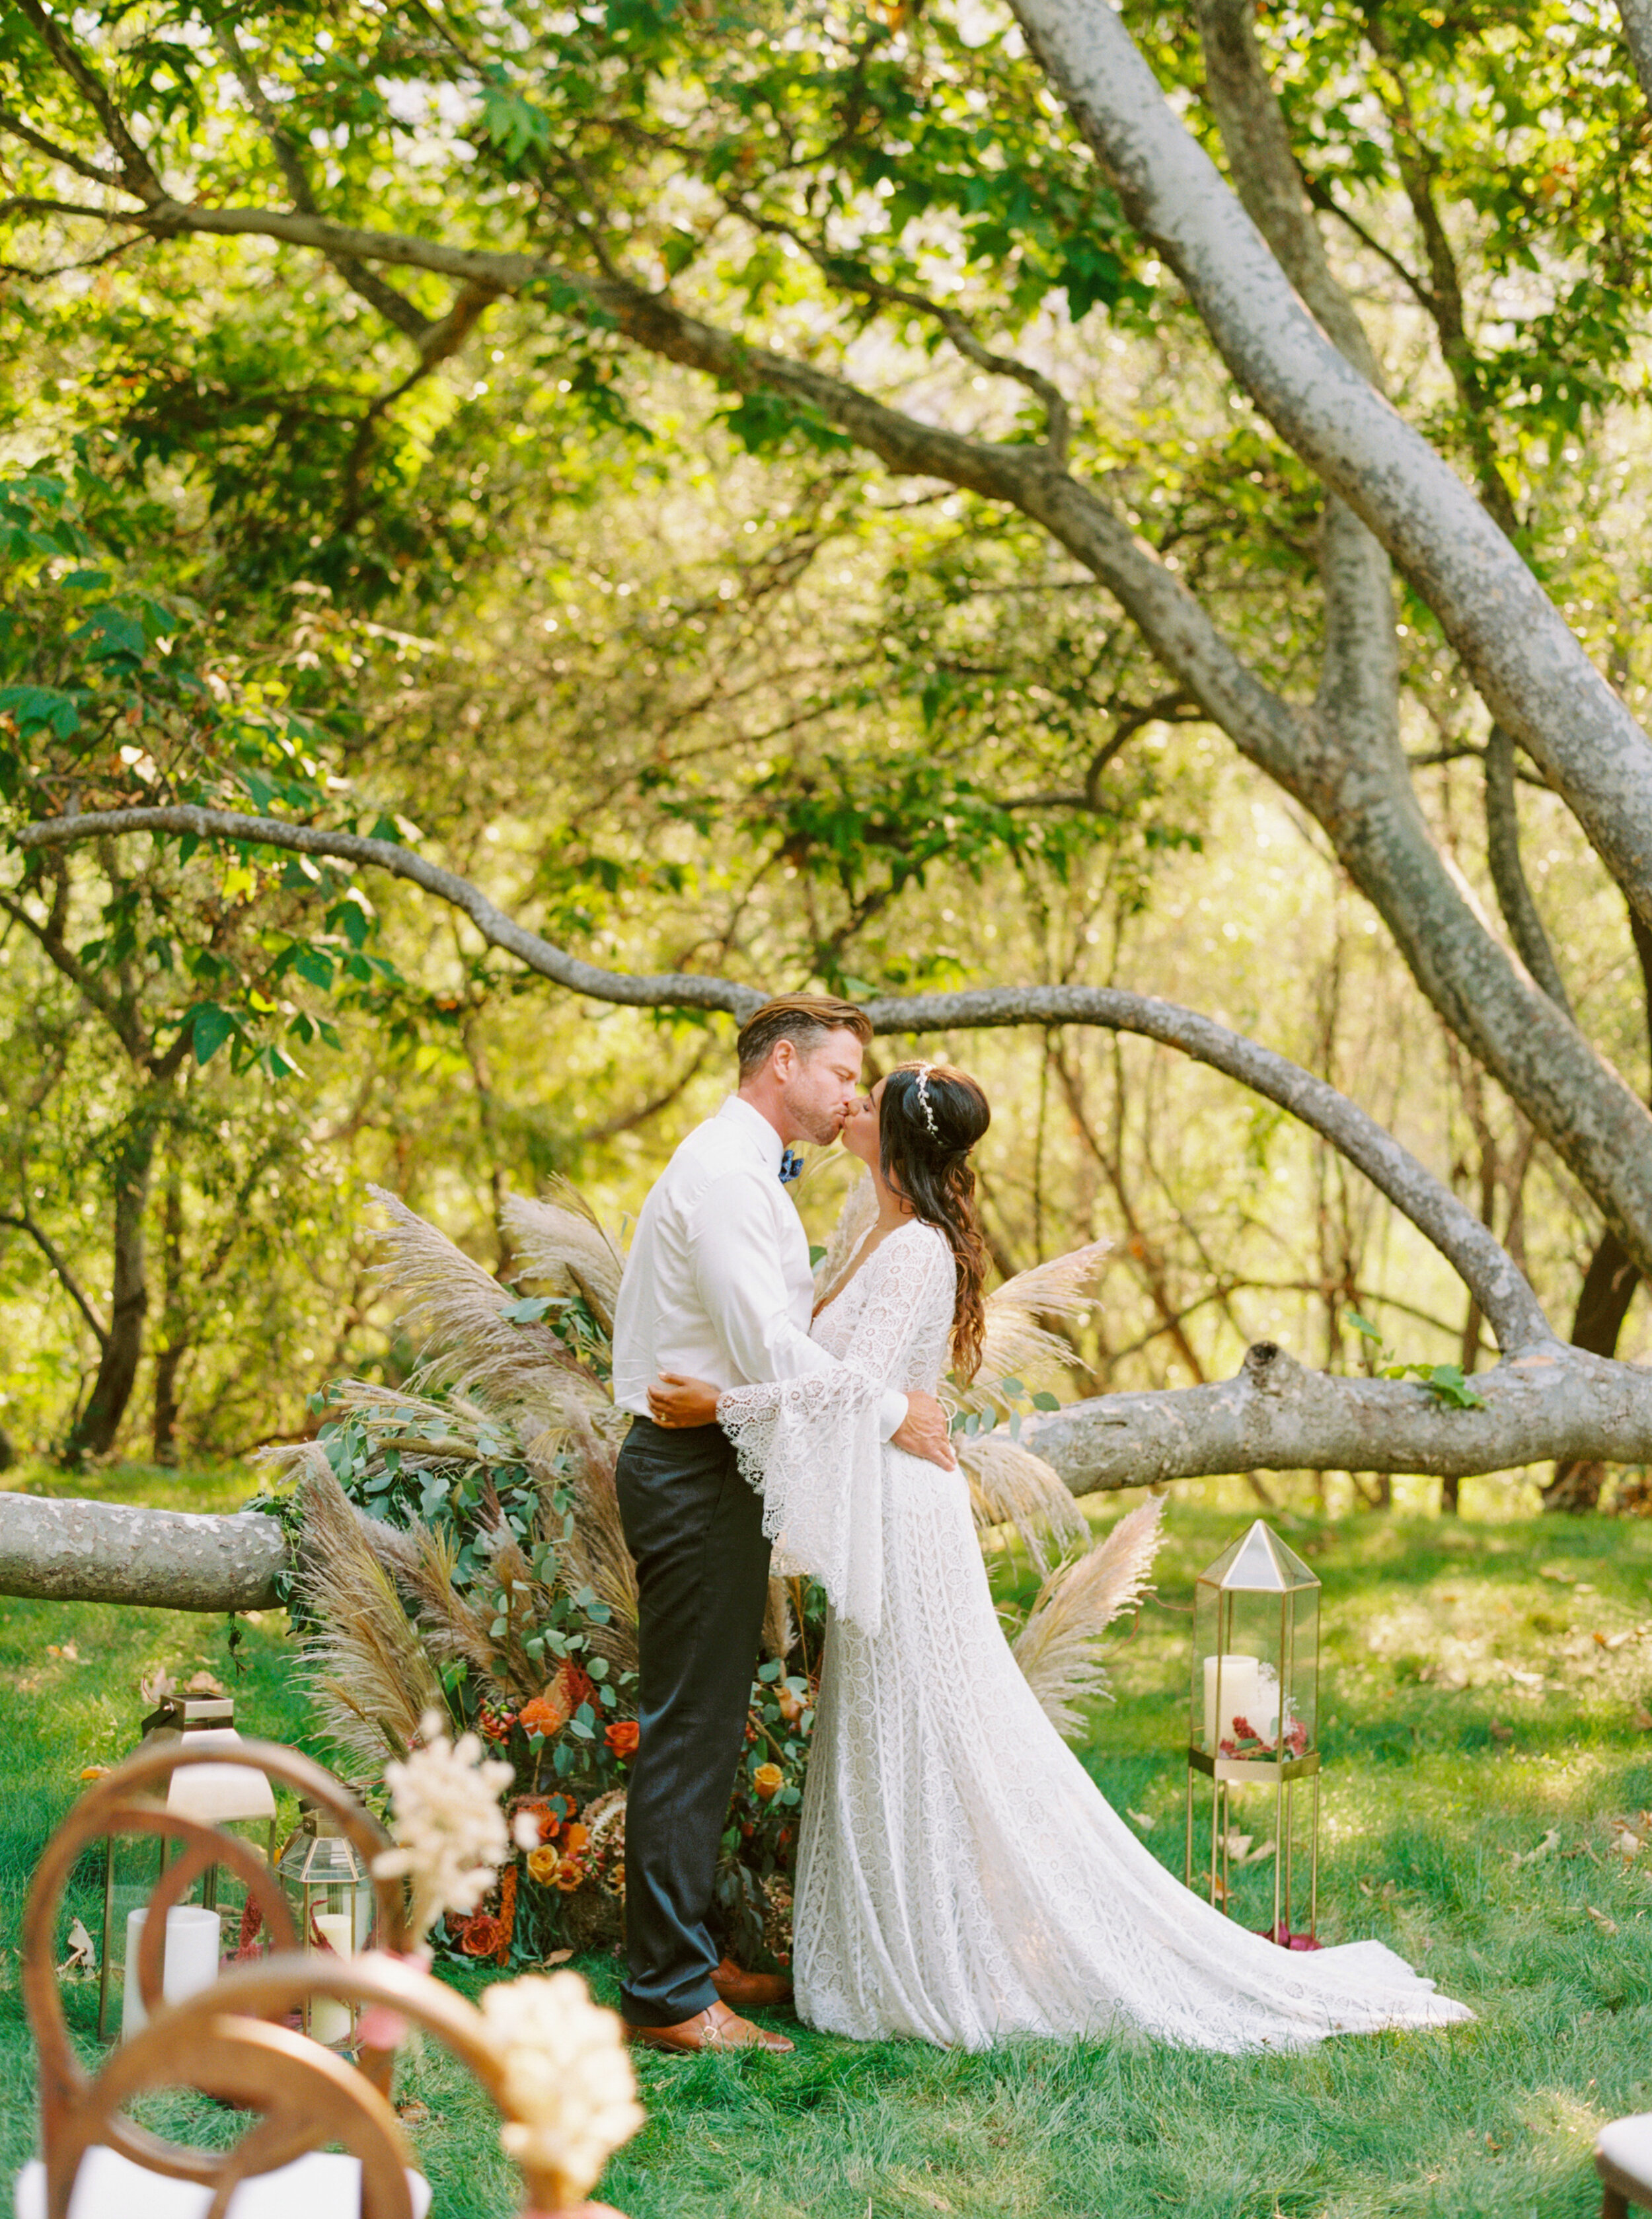 Sarahi Hadden - An Earthy Summer Boho Inspired Wedding with Sunset Hues at Gardener Ranch-129.jpg